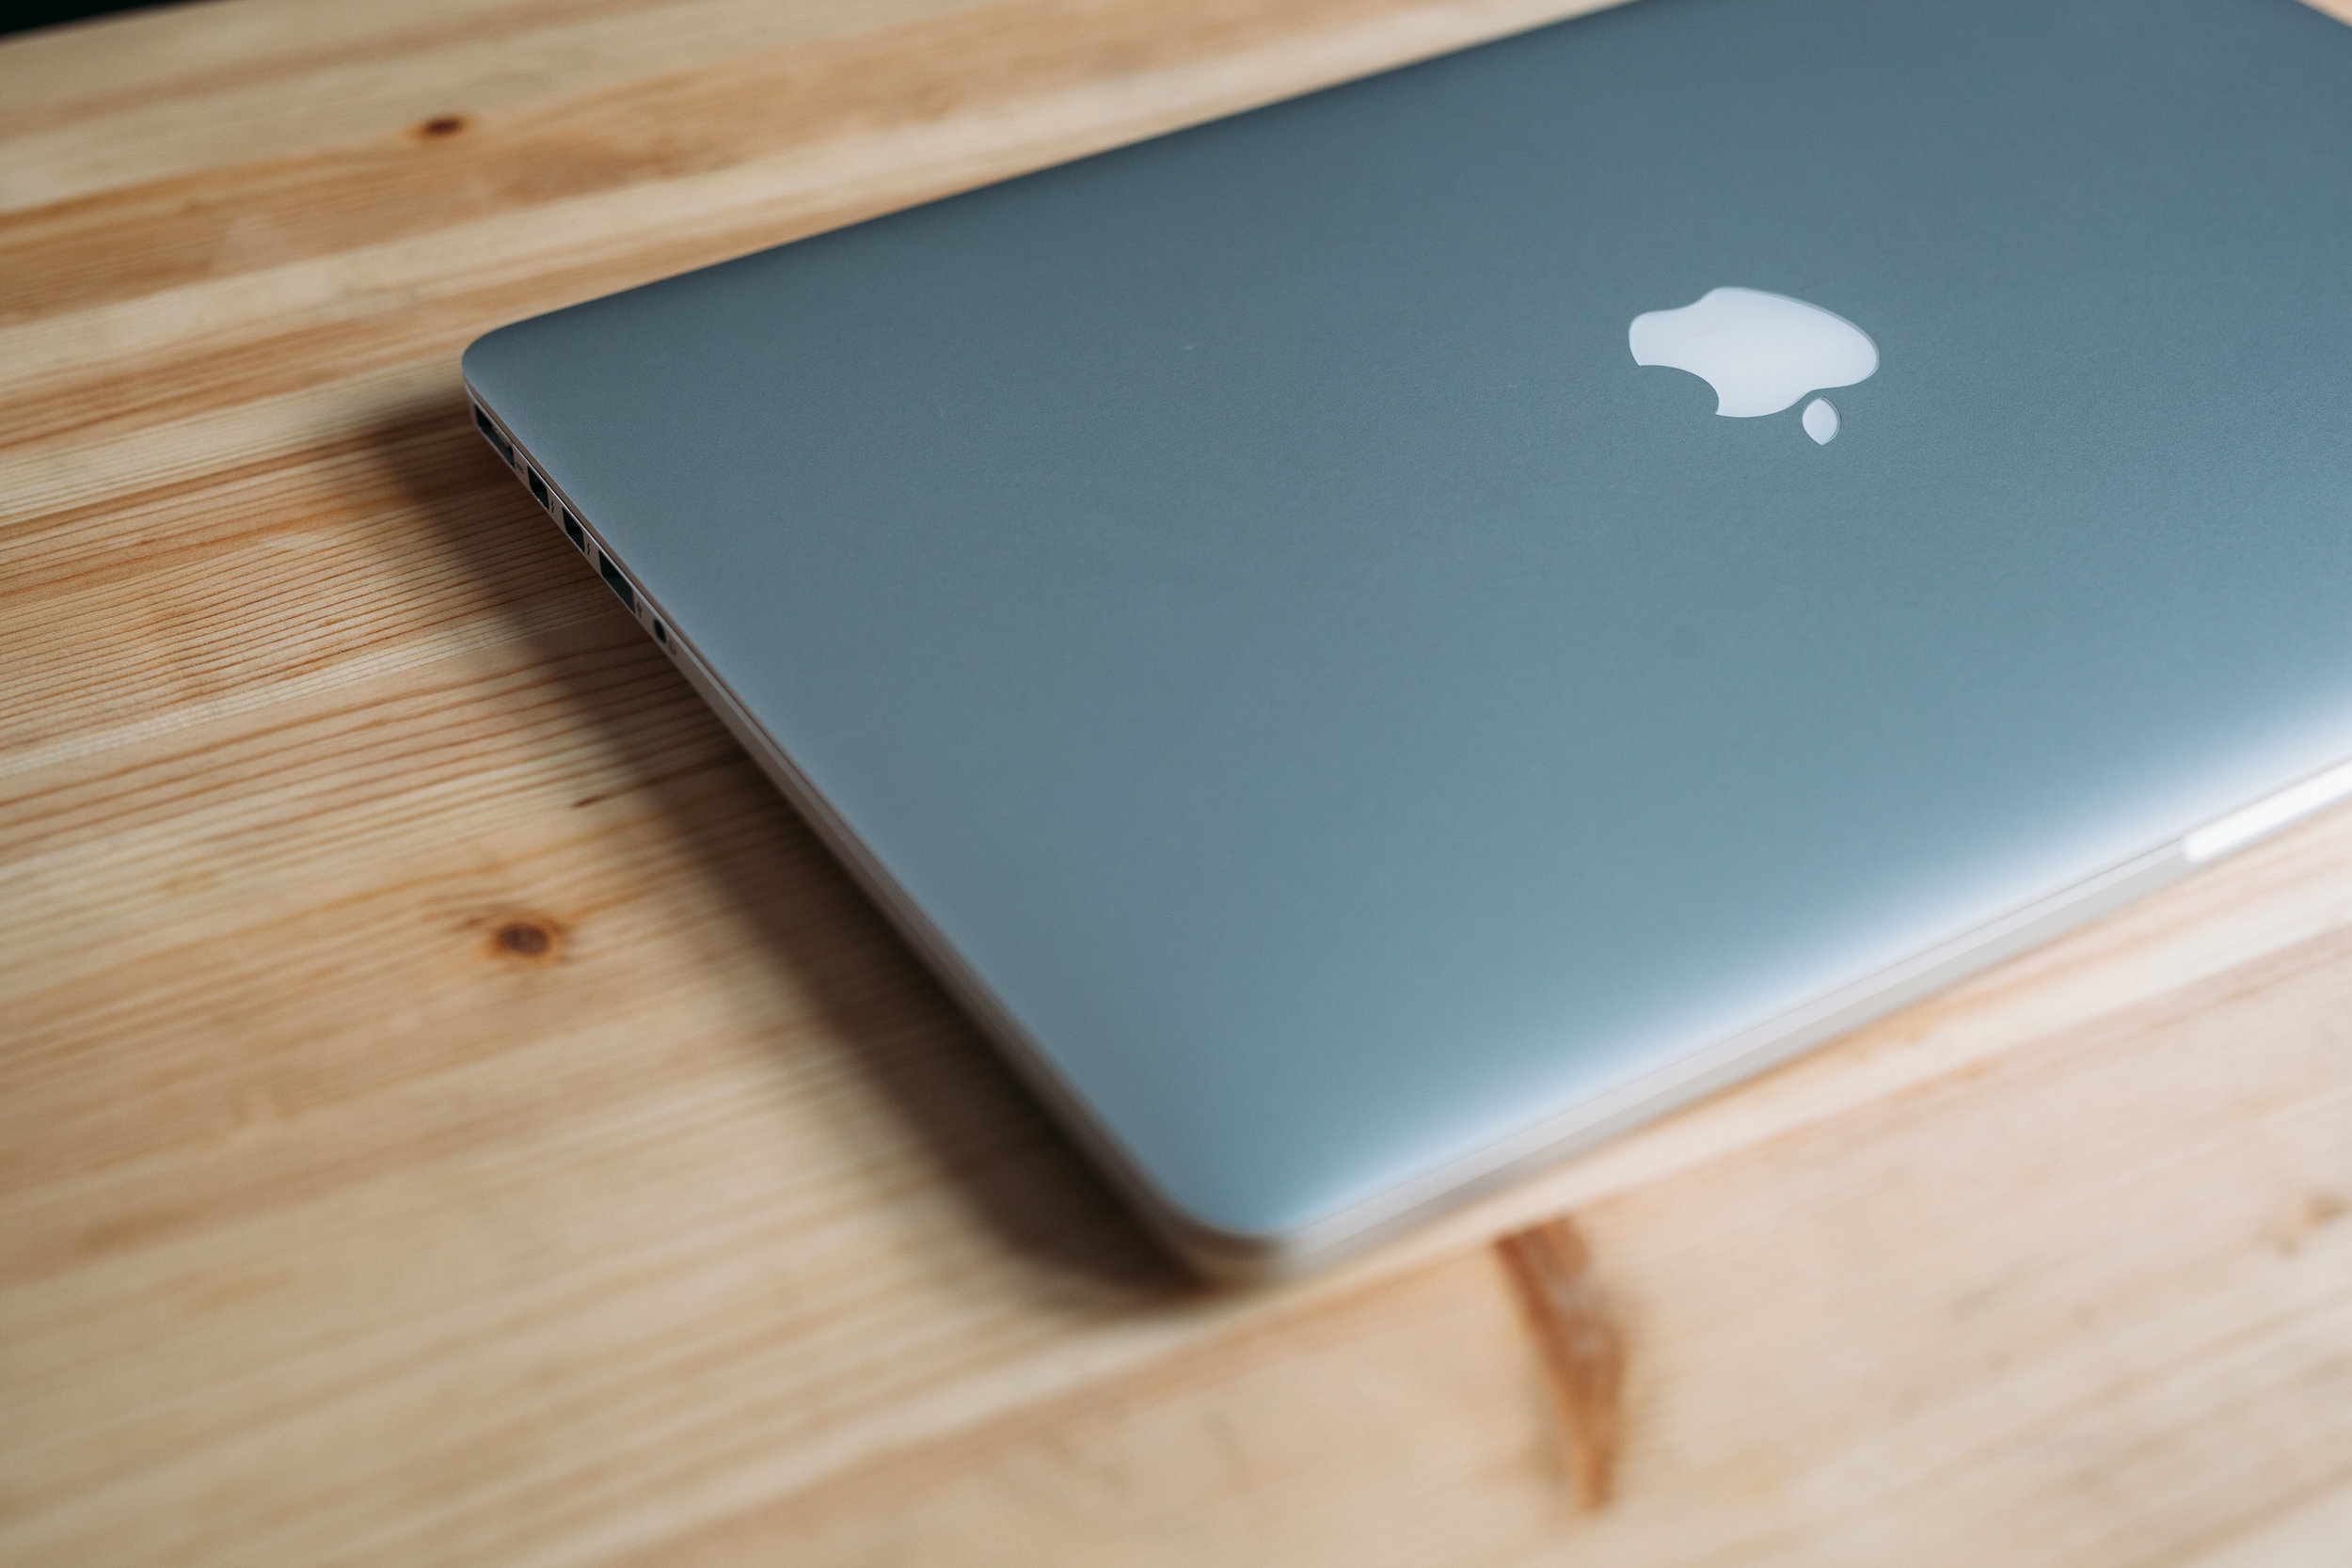 MacBook Pro (Retina, 15-inch, Mid 2012) — One:One